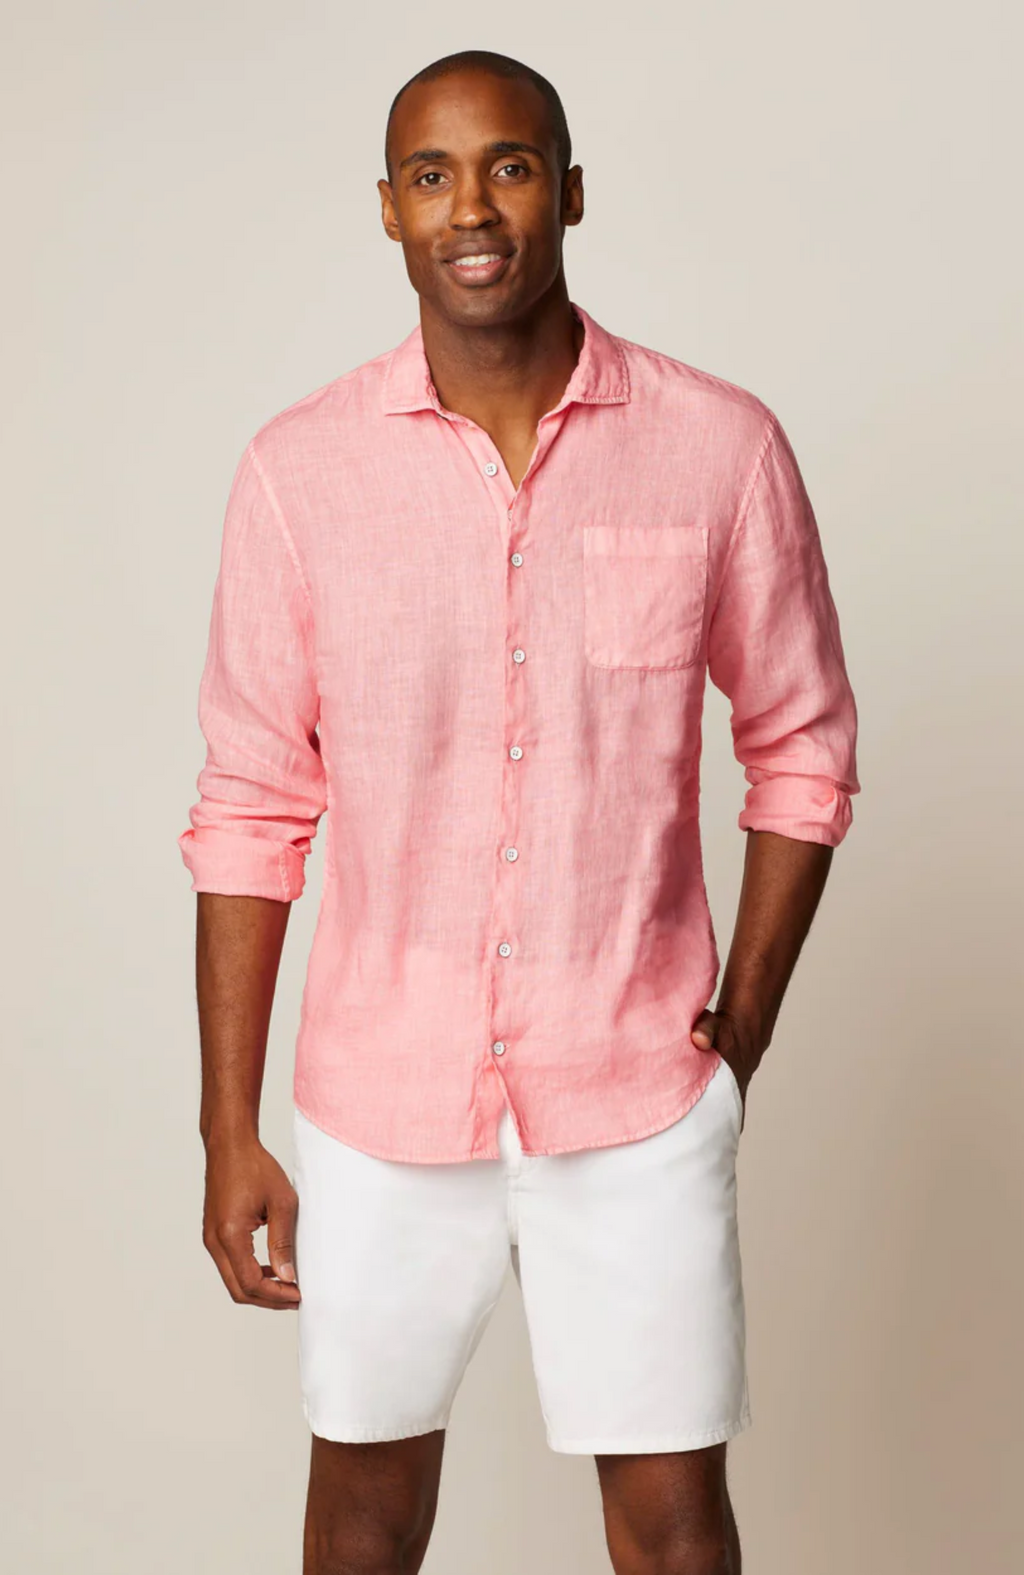 Johnnie-O - Emory Linen Button Up Shirt